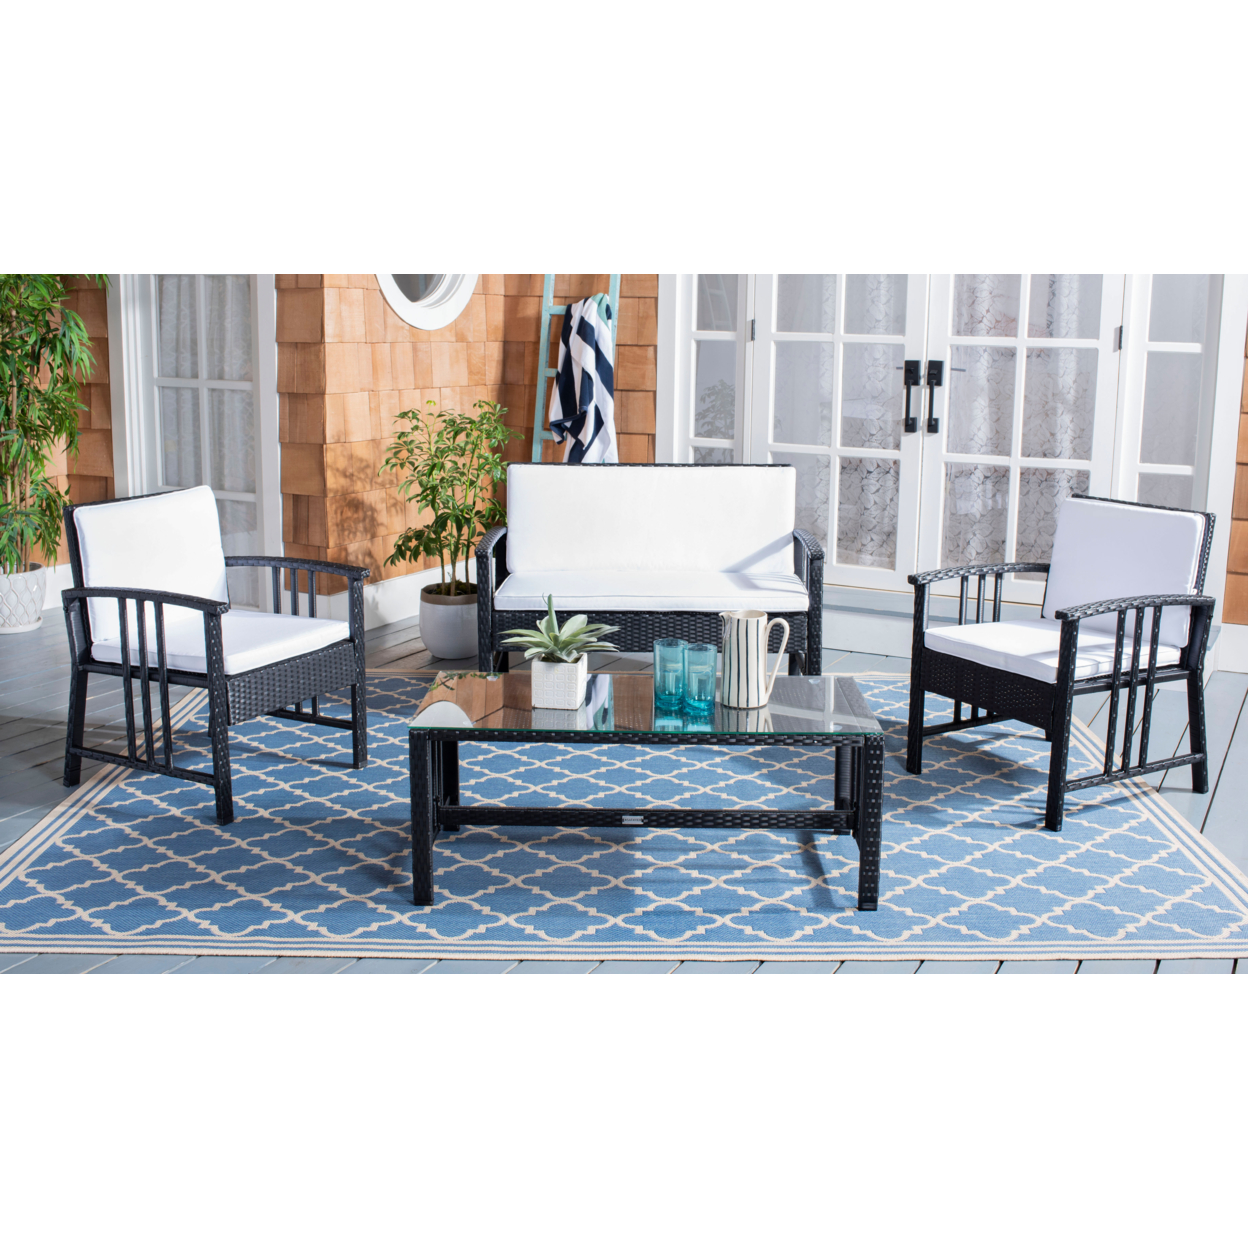 SAFAVIEH Outdoor Collection Reslor 4-Piece Patio Set Black/White Cushion